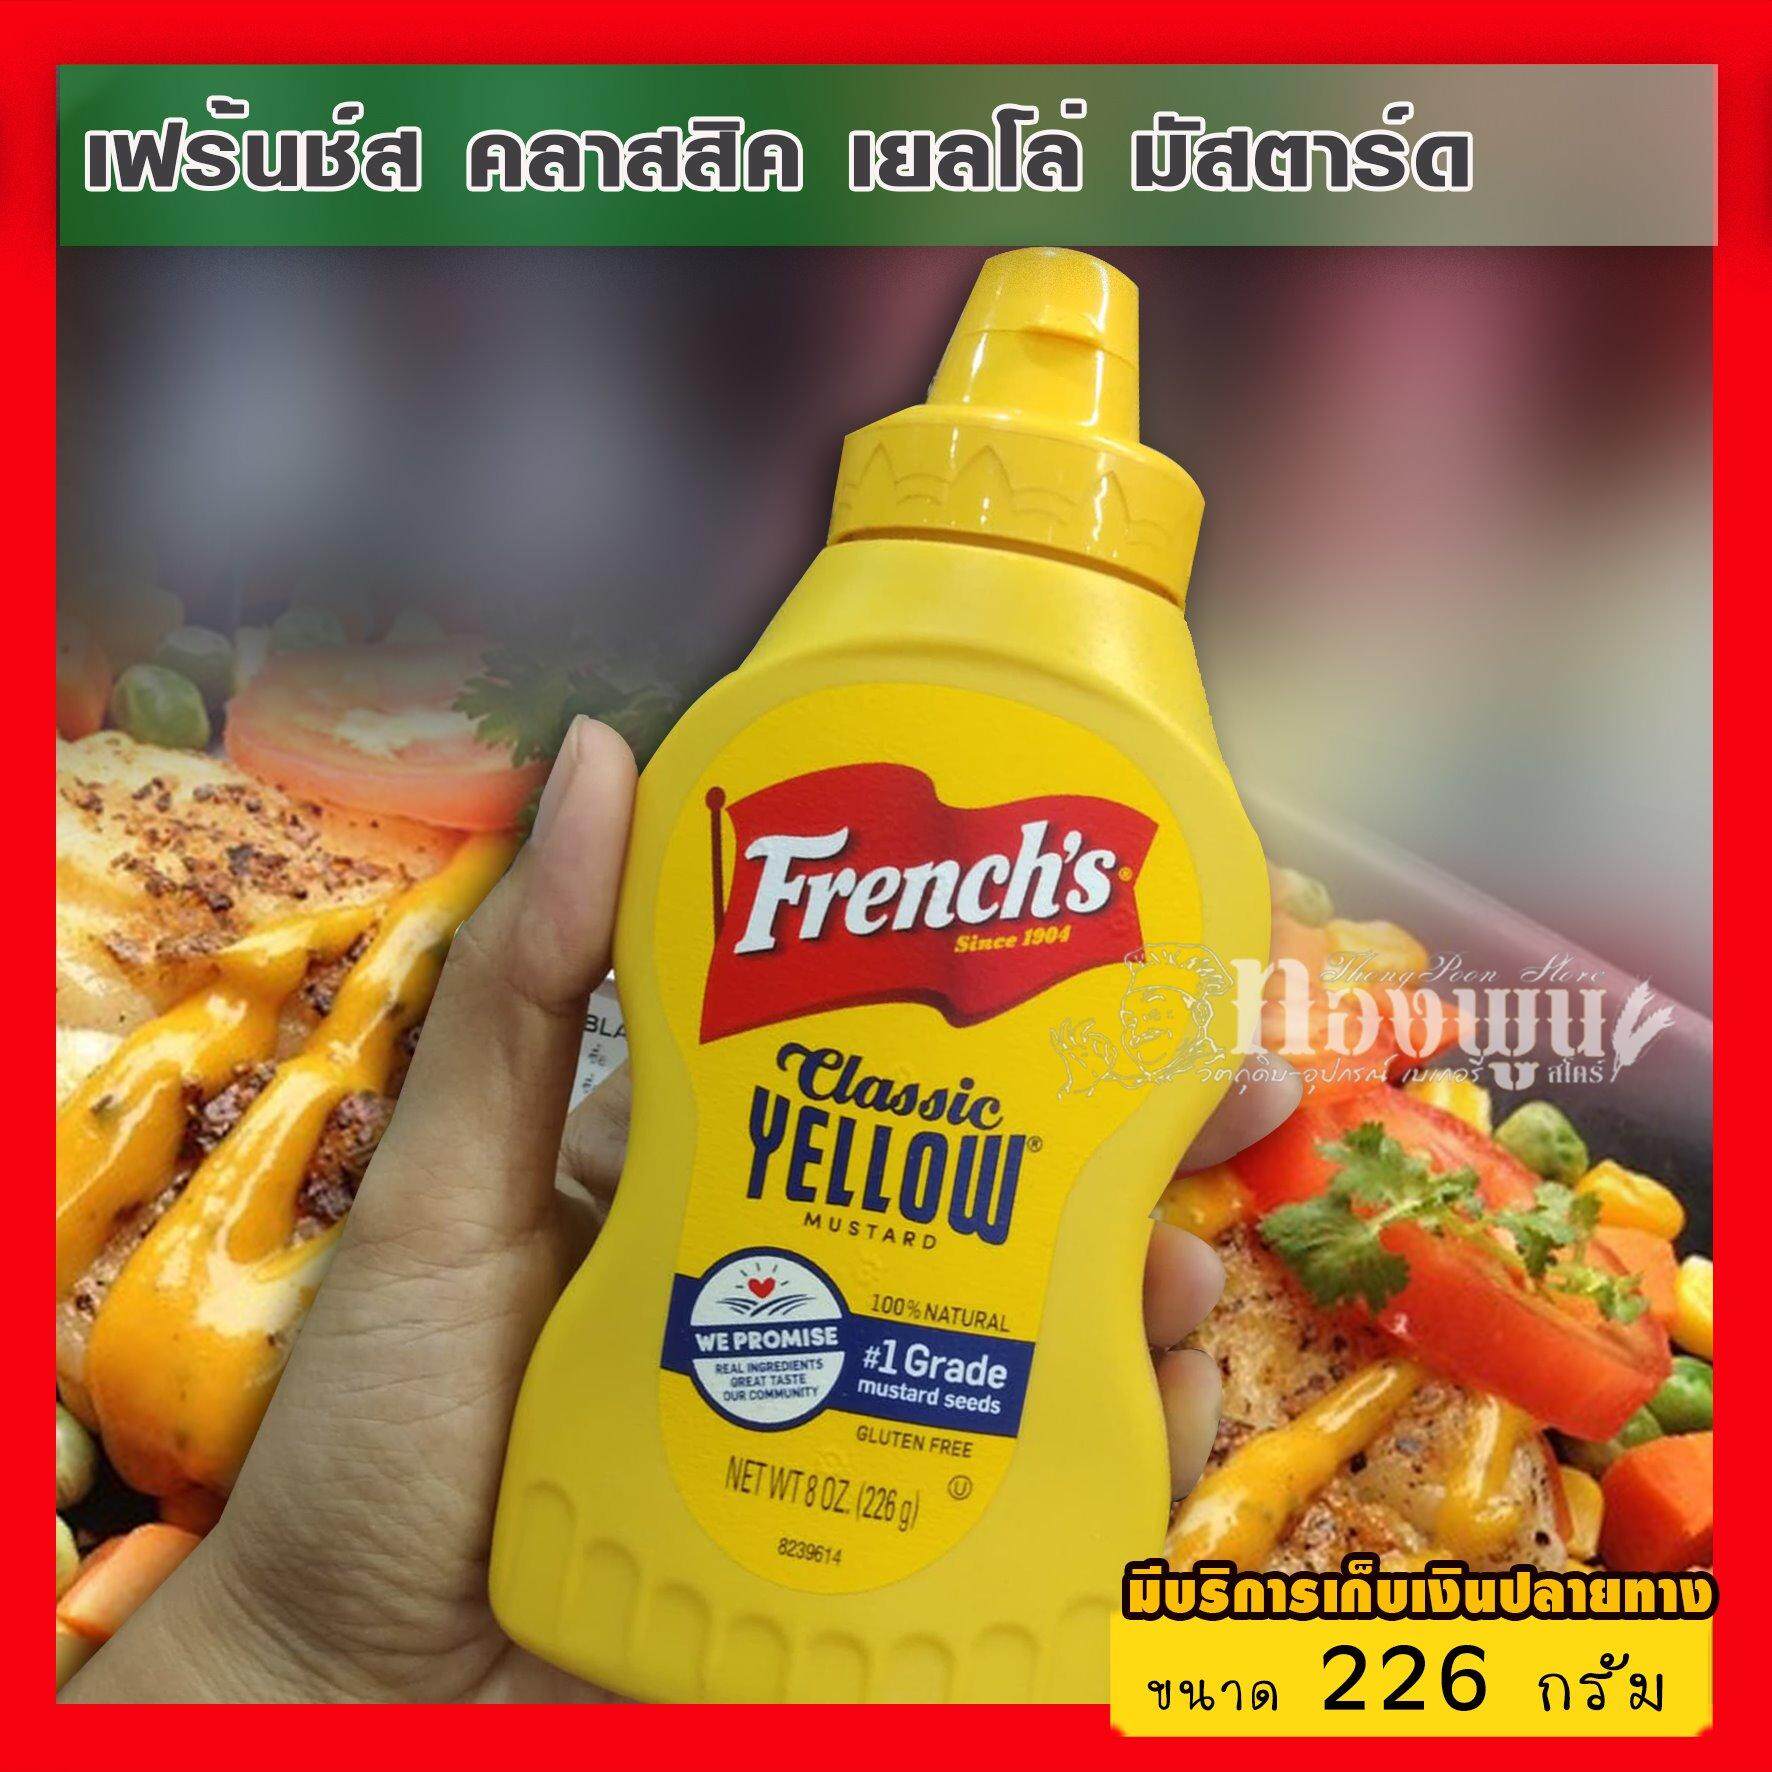 nikakong ซอสมัสตาร์ด คลาสสิค เยลโล่ มัสตาร์ด ตรา เฟร้นช์ (French's Classic yellow Mustard ) ขนาด 226 กรัม ชนิดขวดบีบ กลูเตนฟรี จากสหรัฐอเมริกา